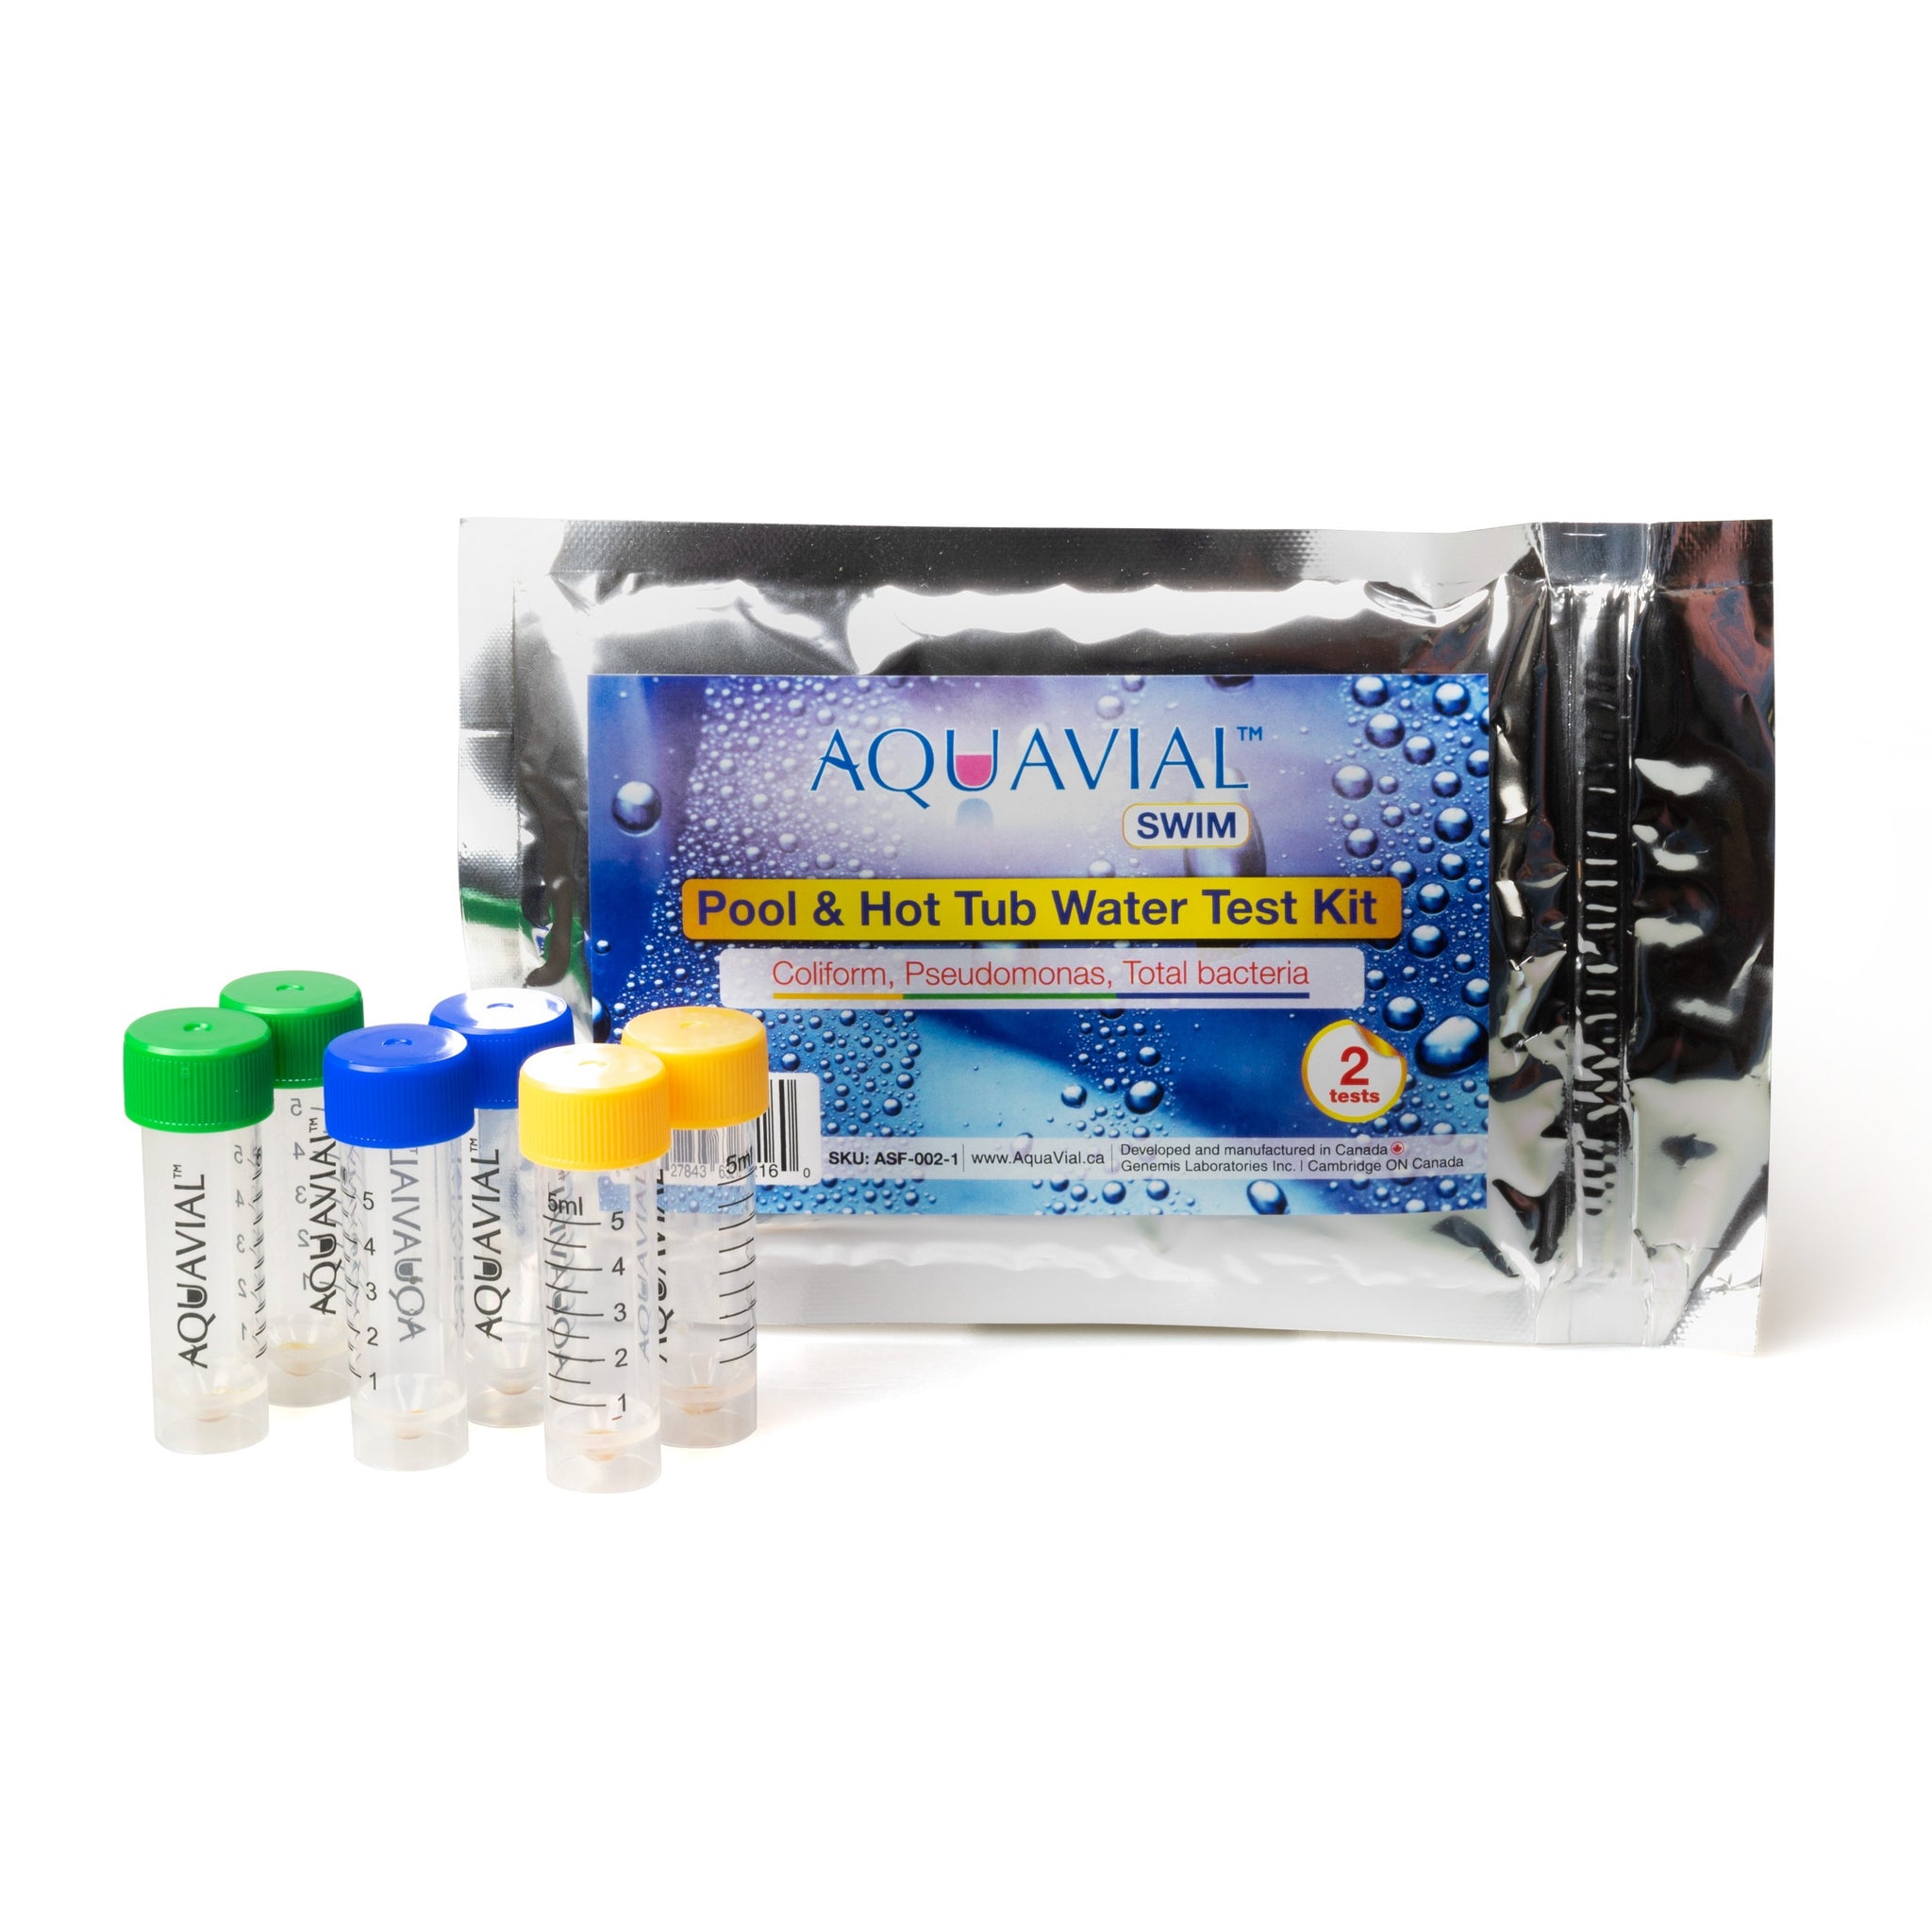 AquaVial SWIM - Pool & Hot Tub Water Test Kit